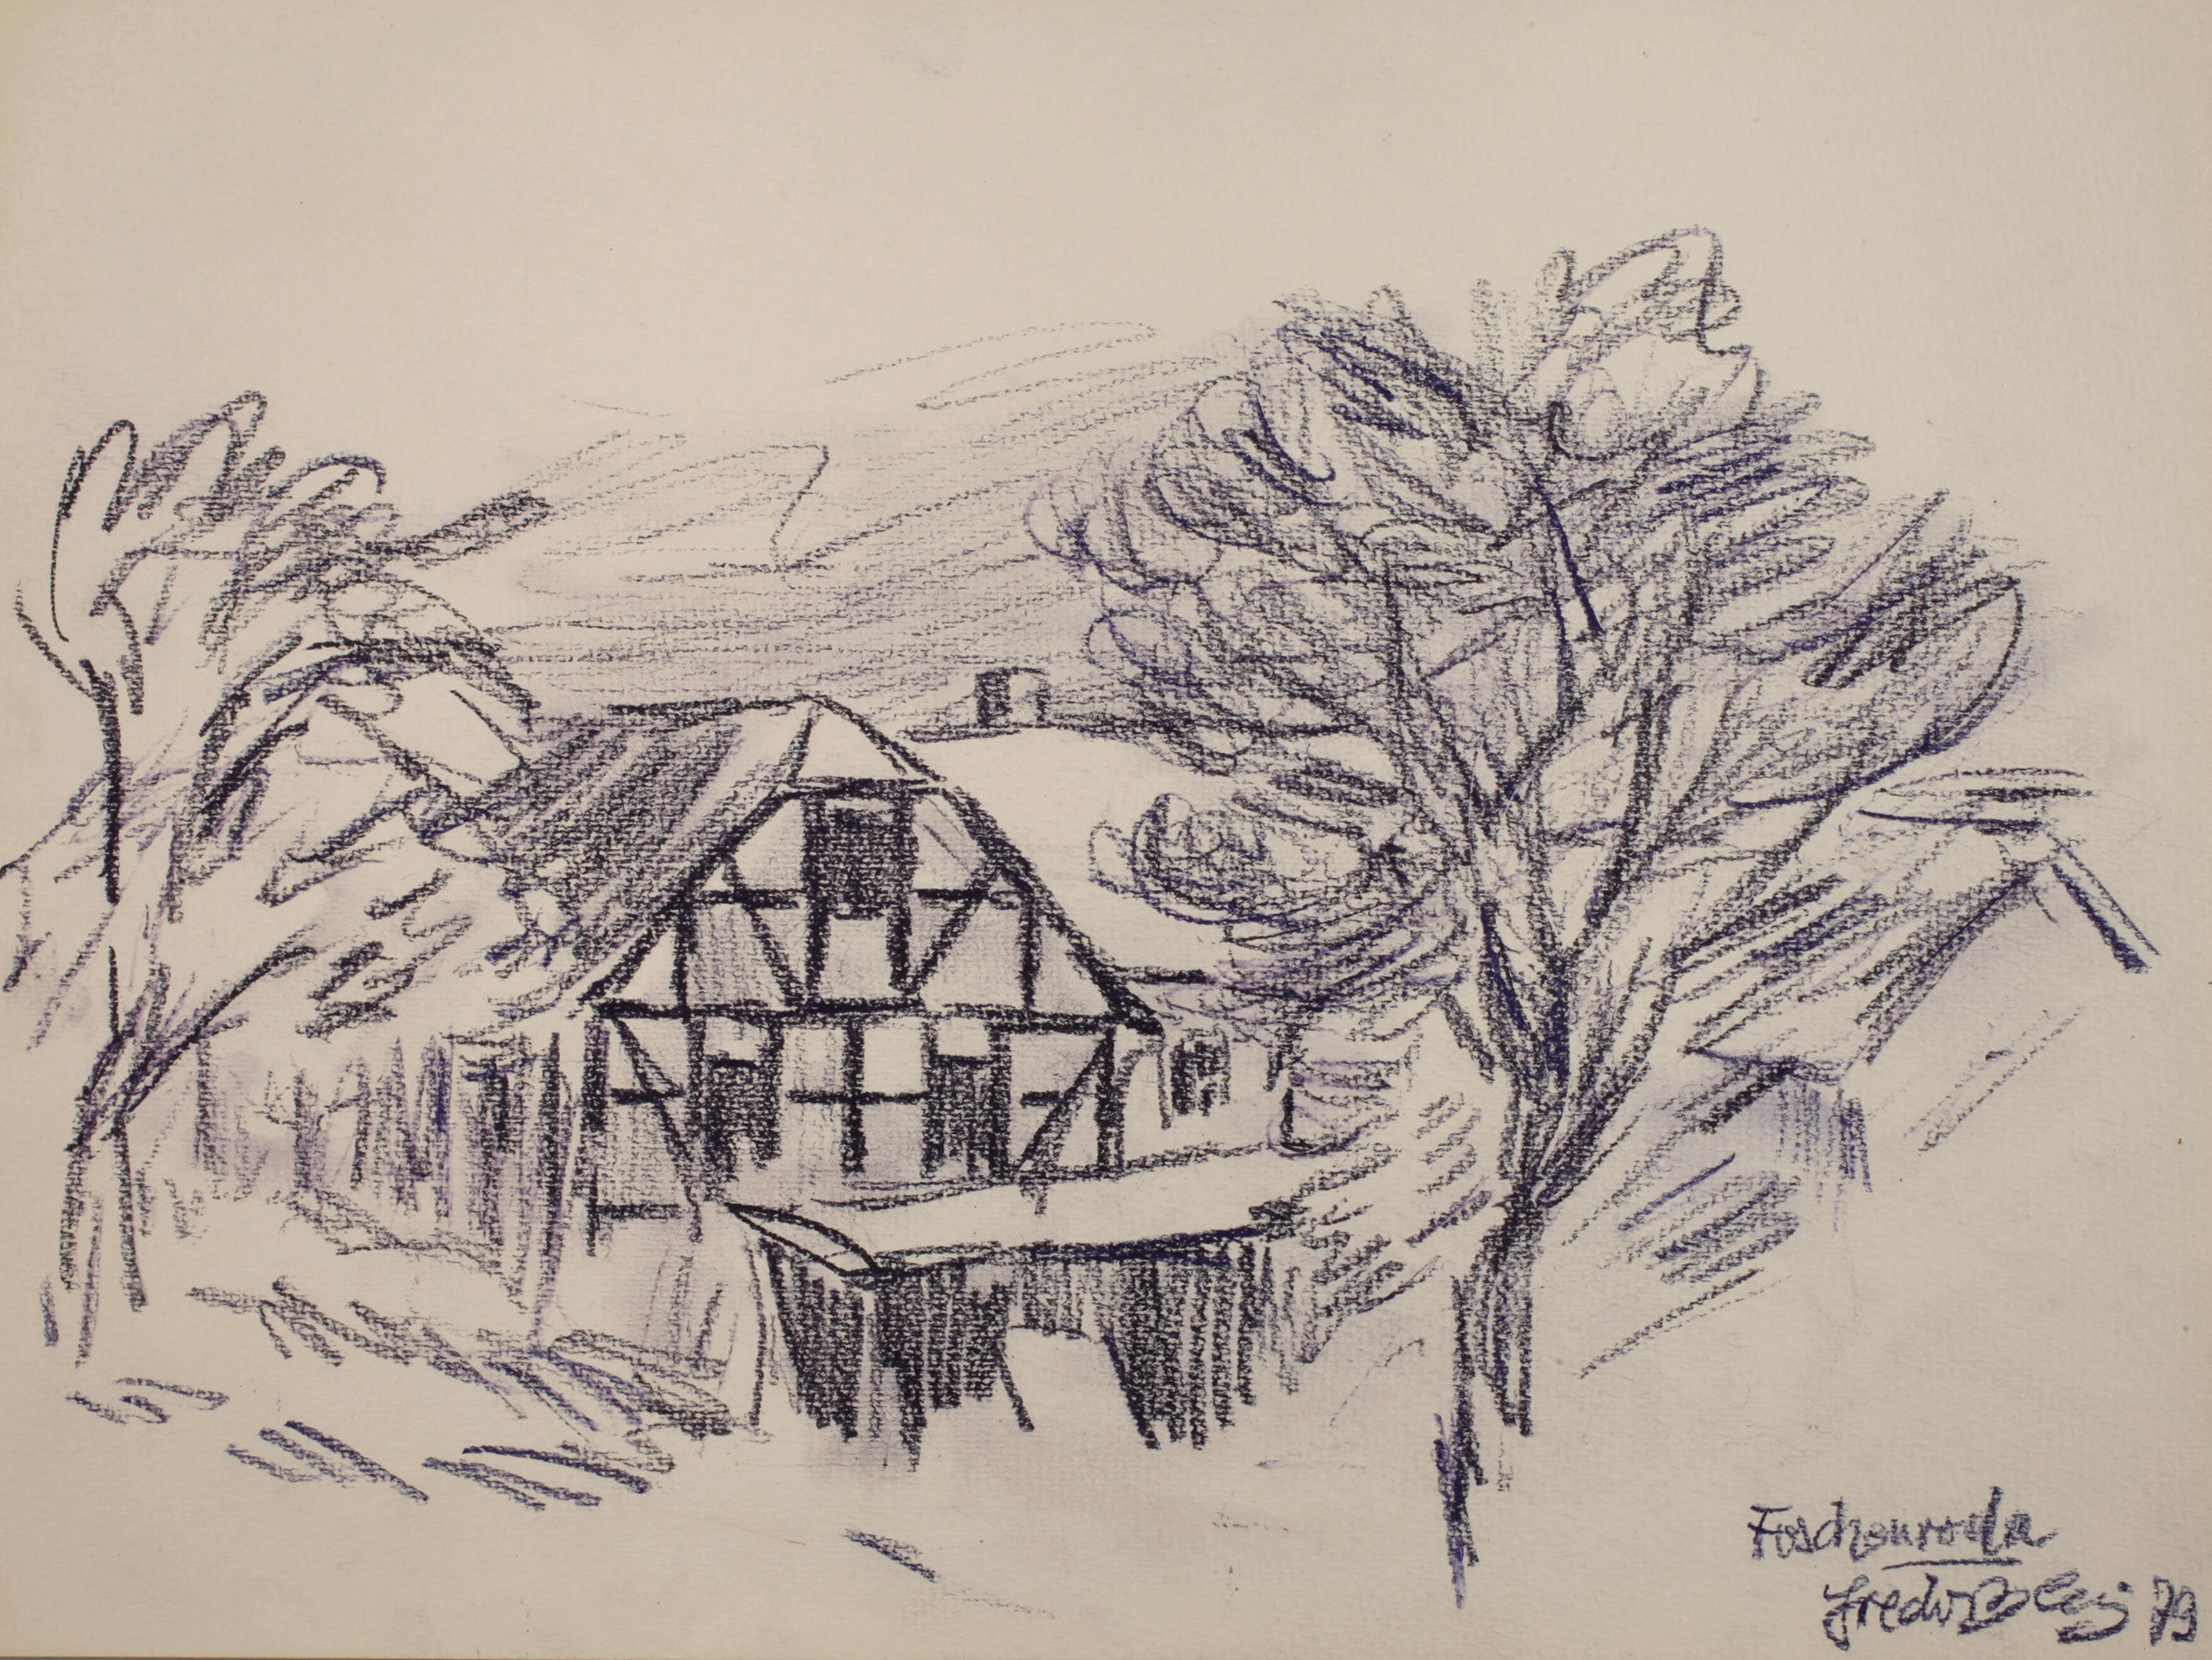 Fredo Bley, "Bauernhof in Foschenroda"